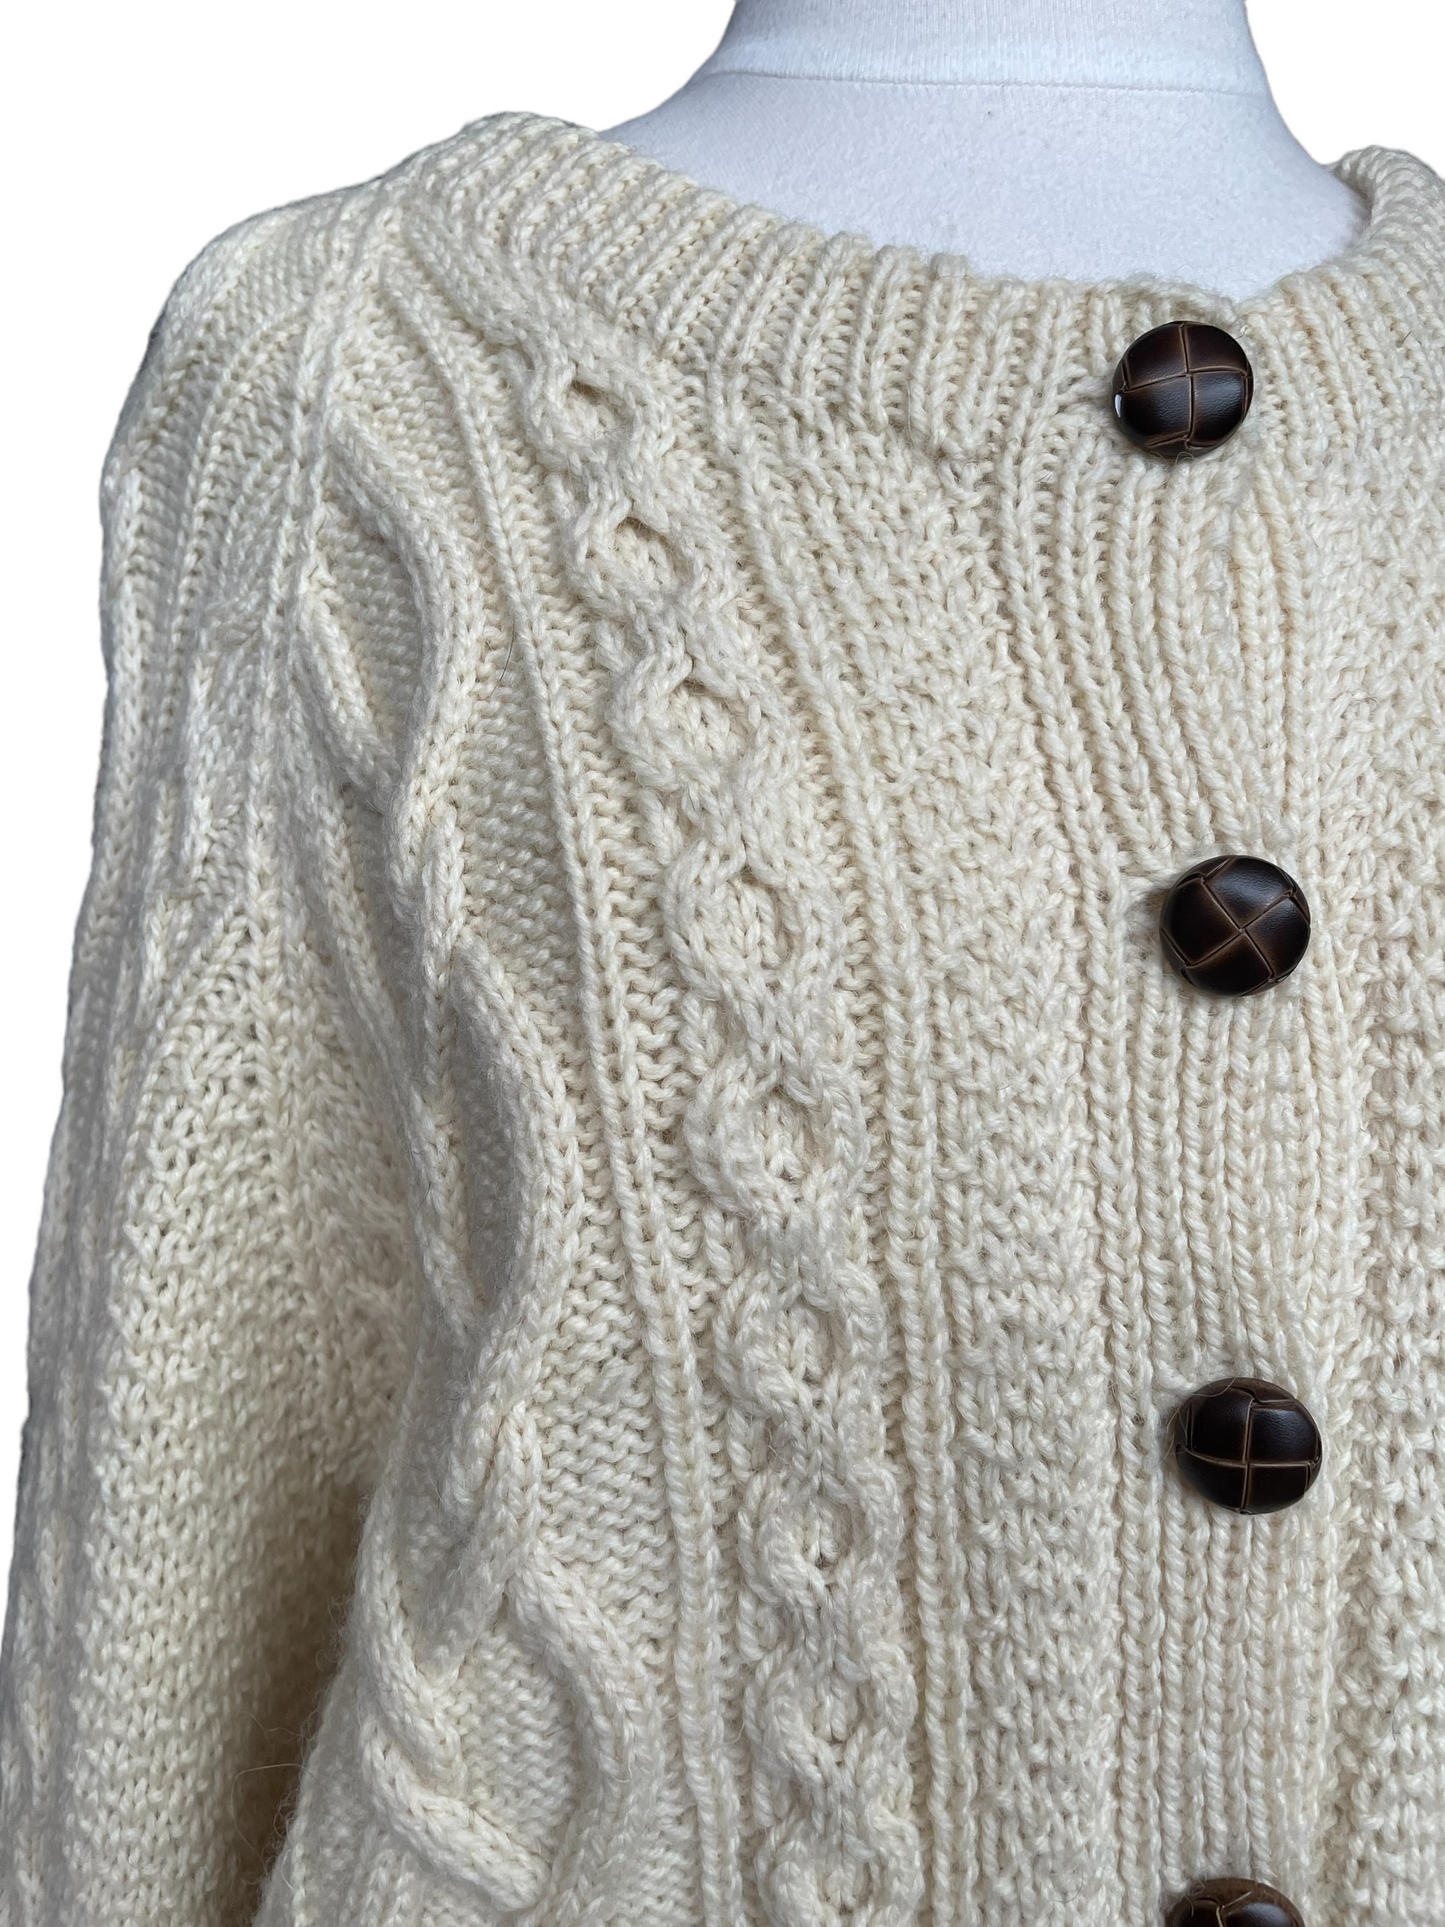 Vintage 1980s Blarney Mills Aran Cardigan | Barn Owl Vintage | Seattle Vintage Sweaters Right side front shoulder view.